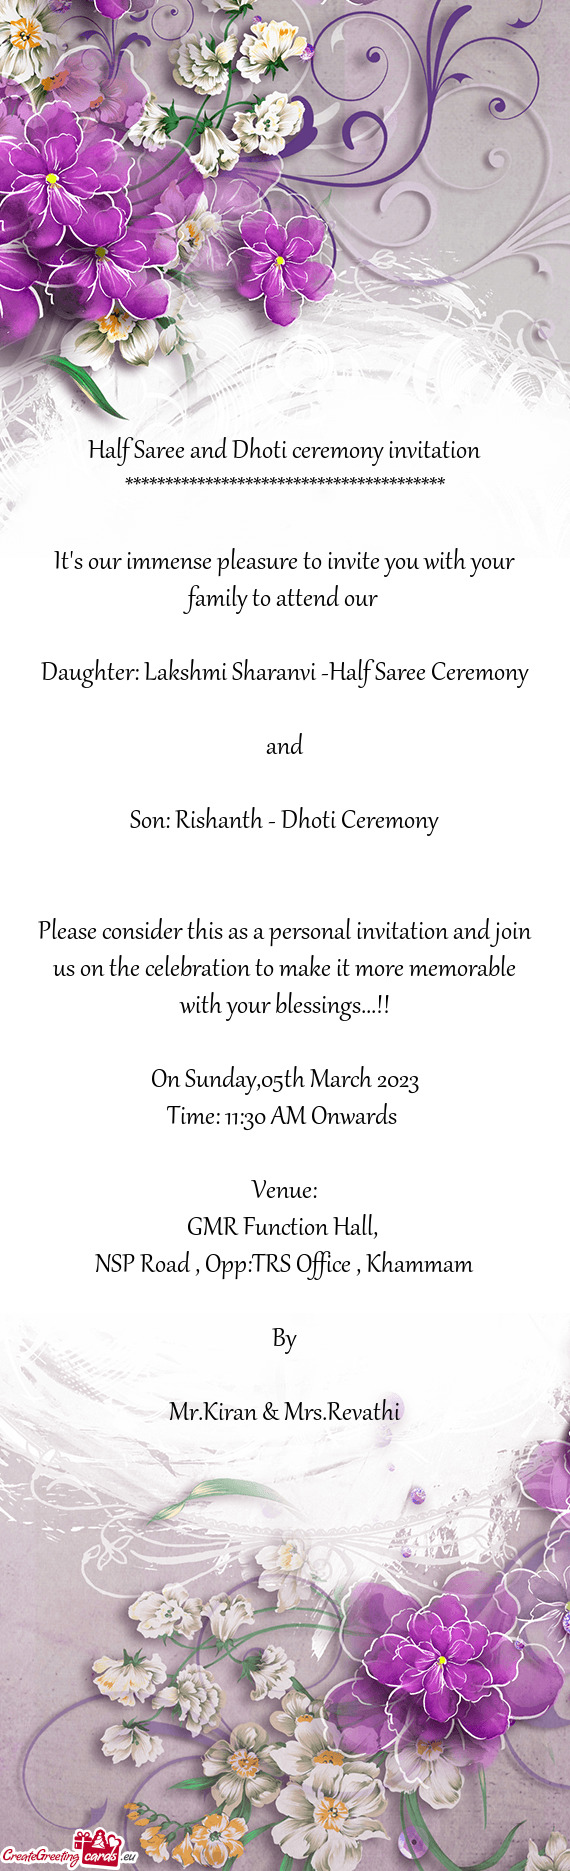 Daughter: Lakshmi Sharanvi -Half Saree Ceremony